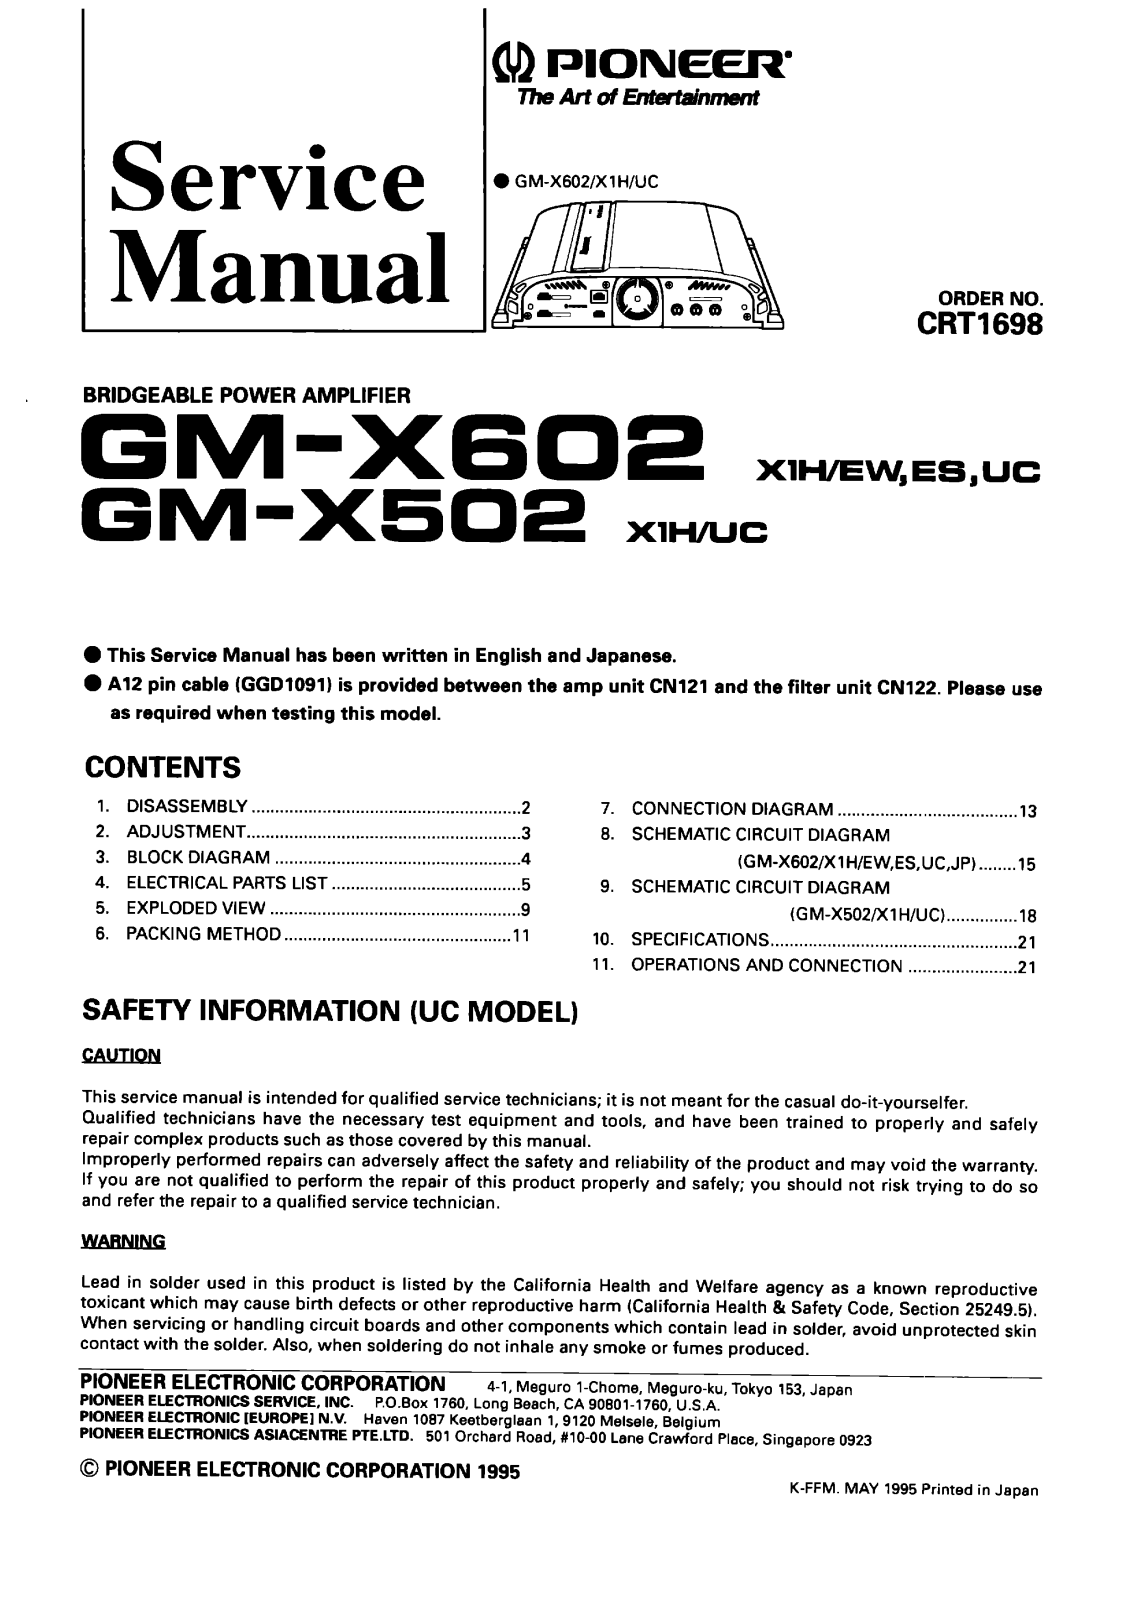 Pioneer GMX-502, GMX-602 Service manual